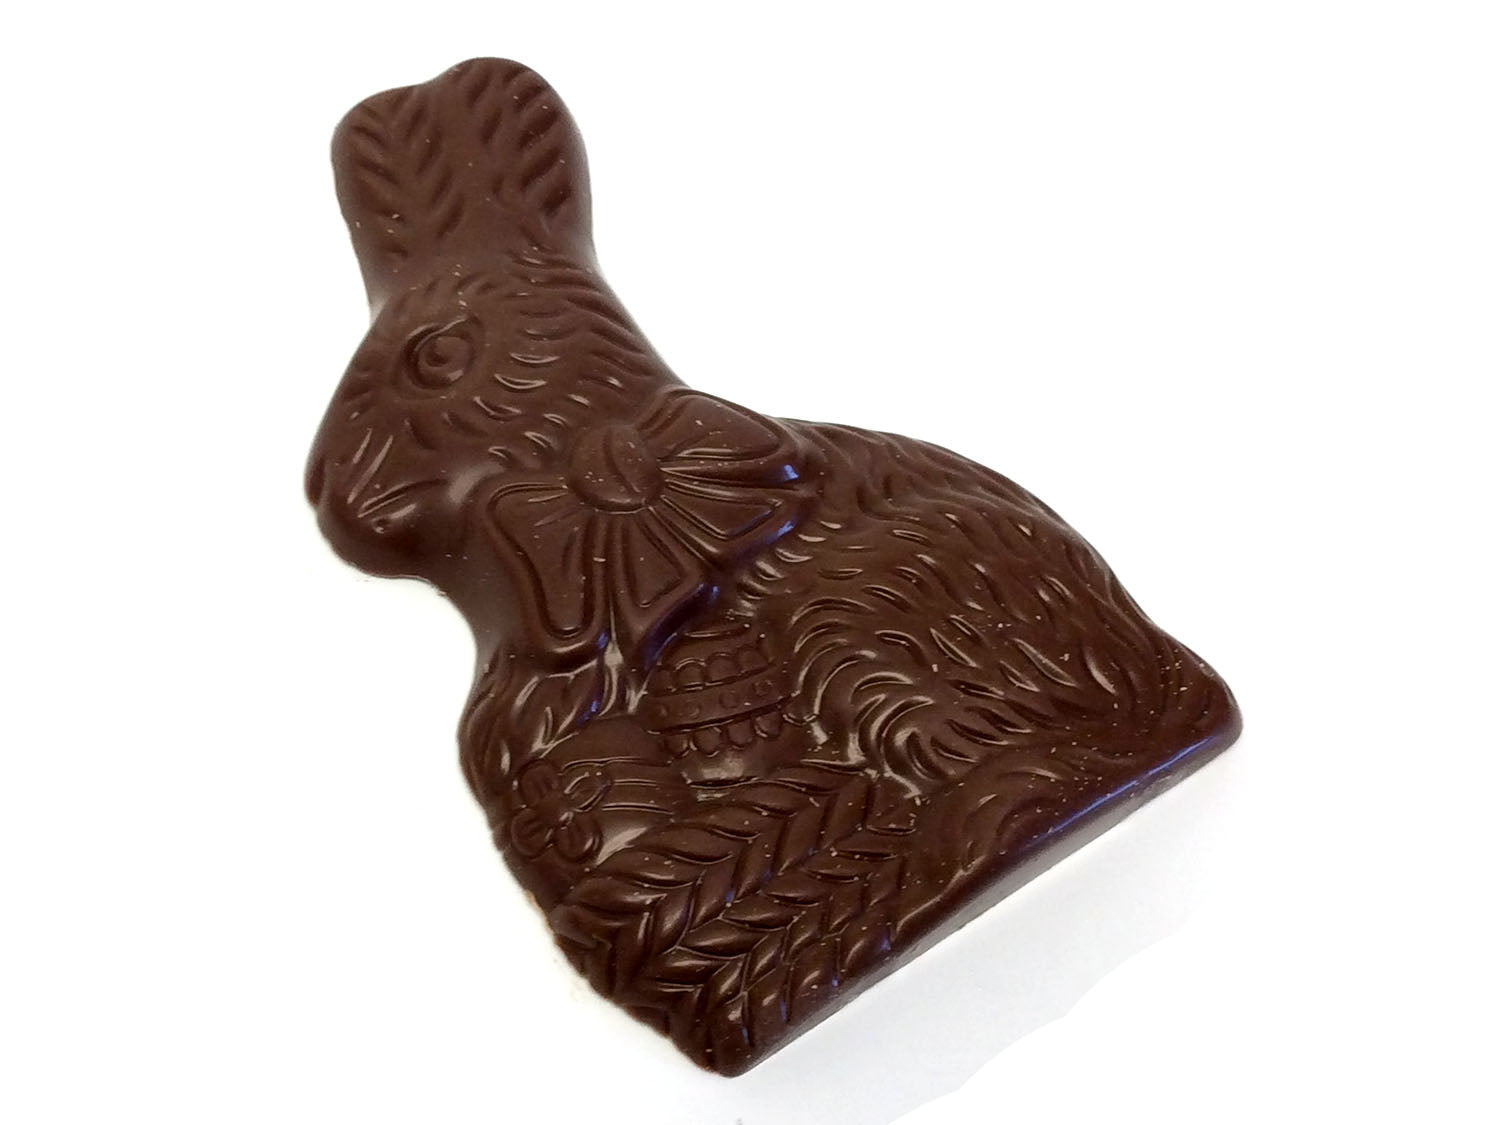 Chocolate Easter Bunny - 5 inch 2.5 oz